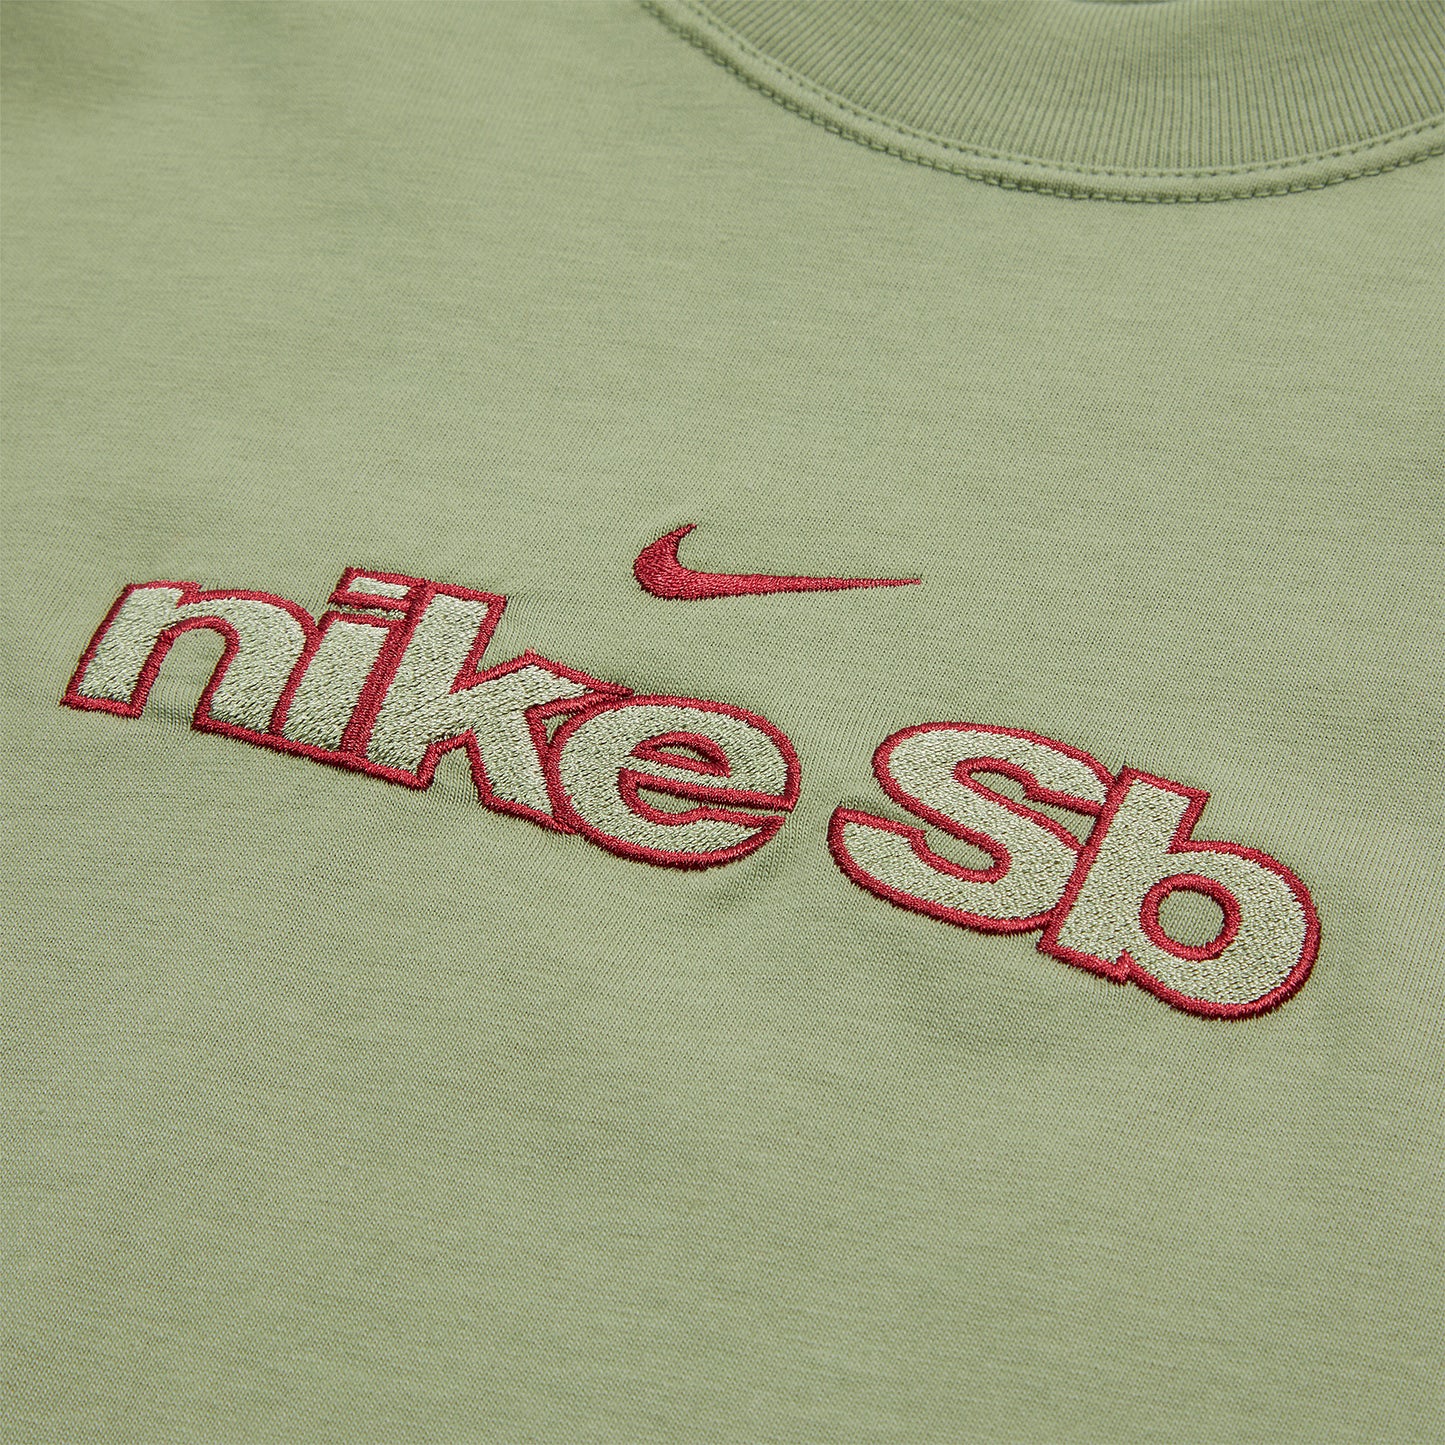 Nike SB T-Shirt (Oil Green)